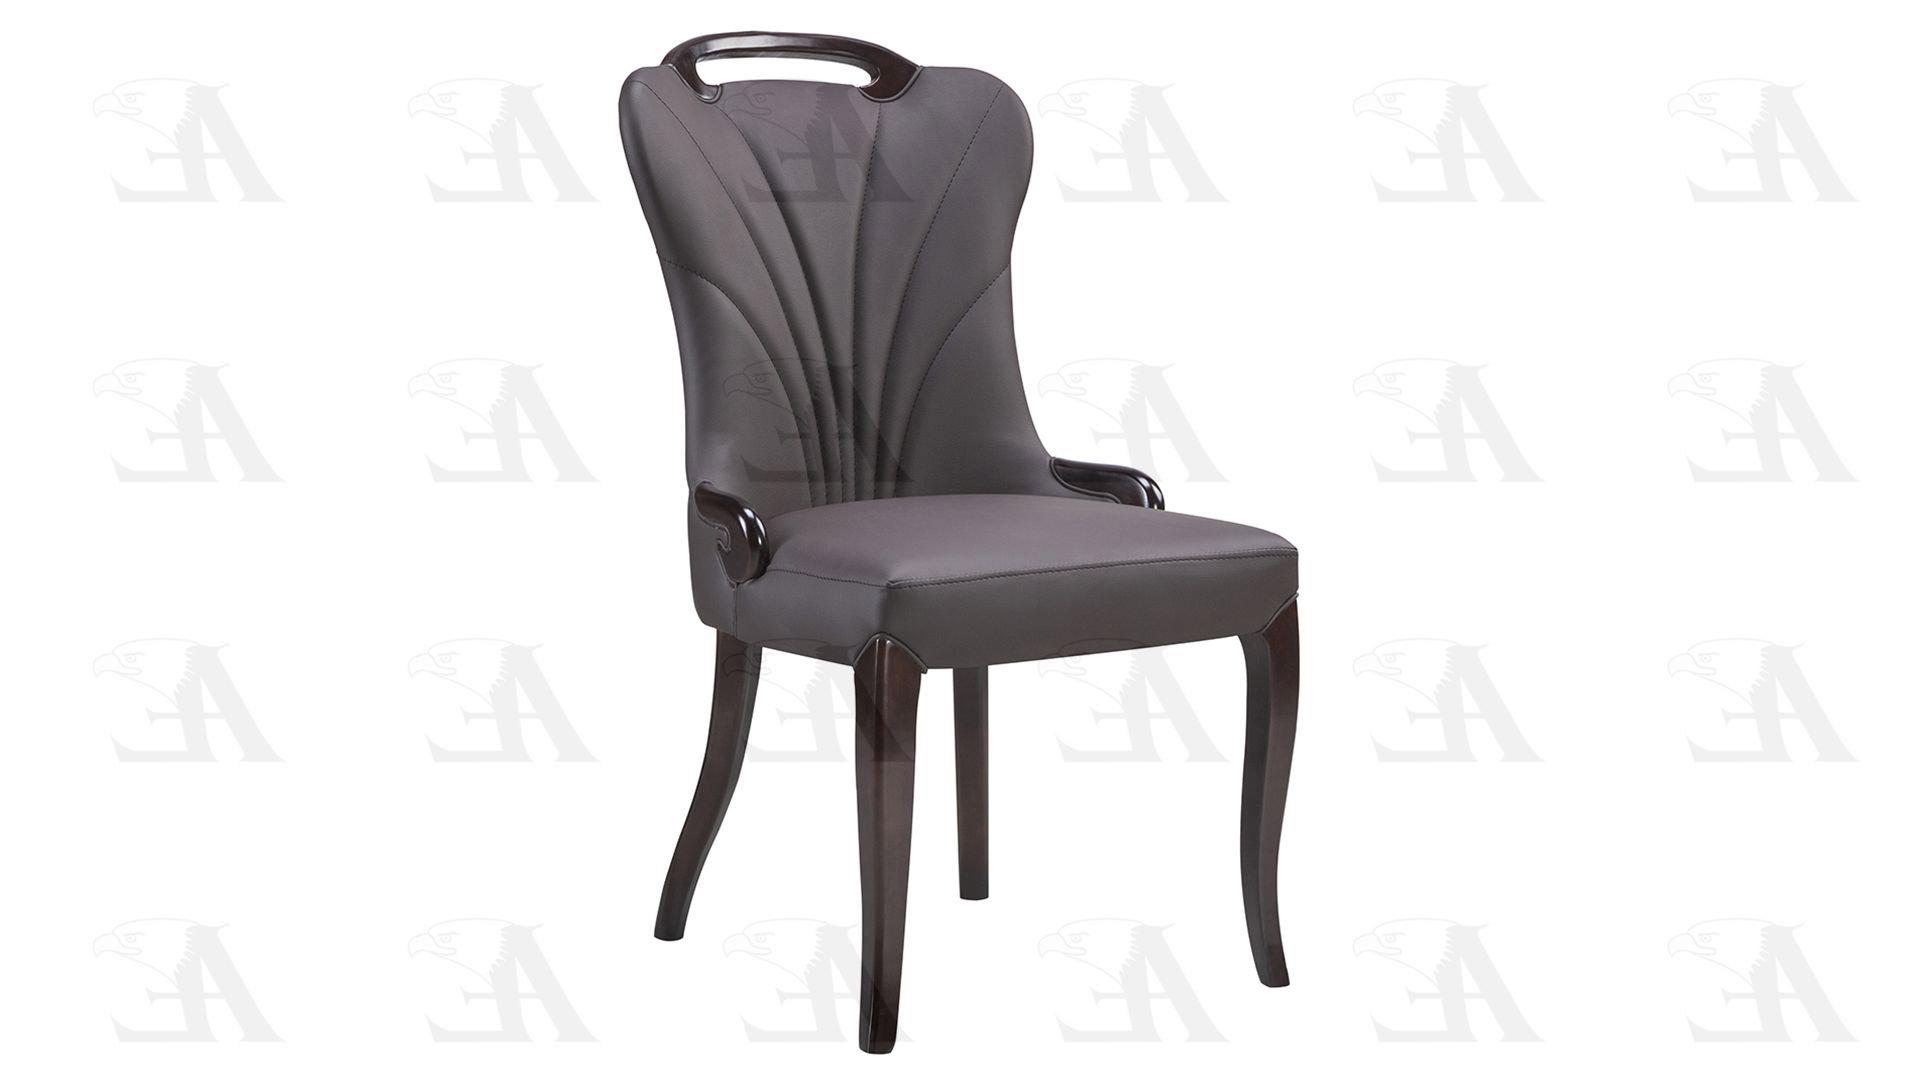 

    
American Eagle Furniture CK-H604-DB Dining Chair Dark Brown CK-H604-DB
